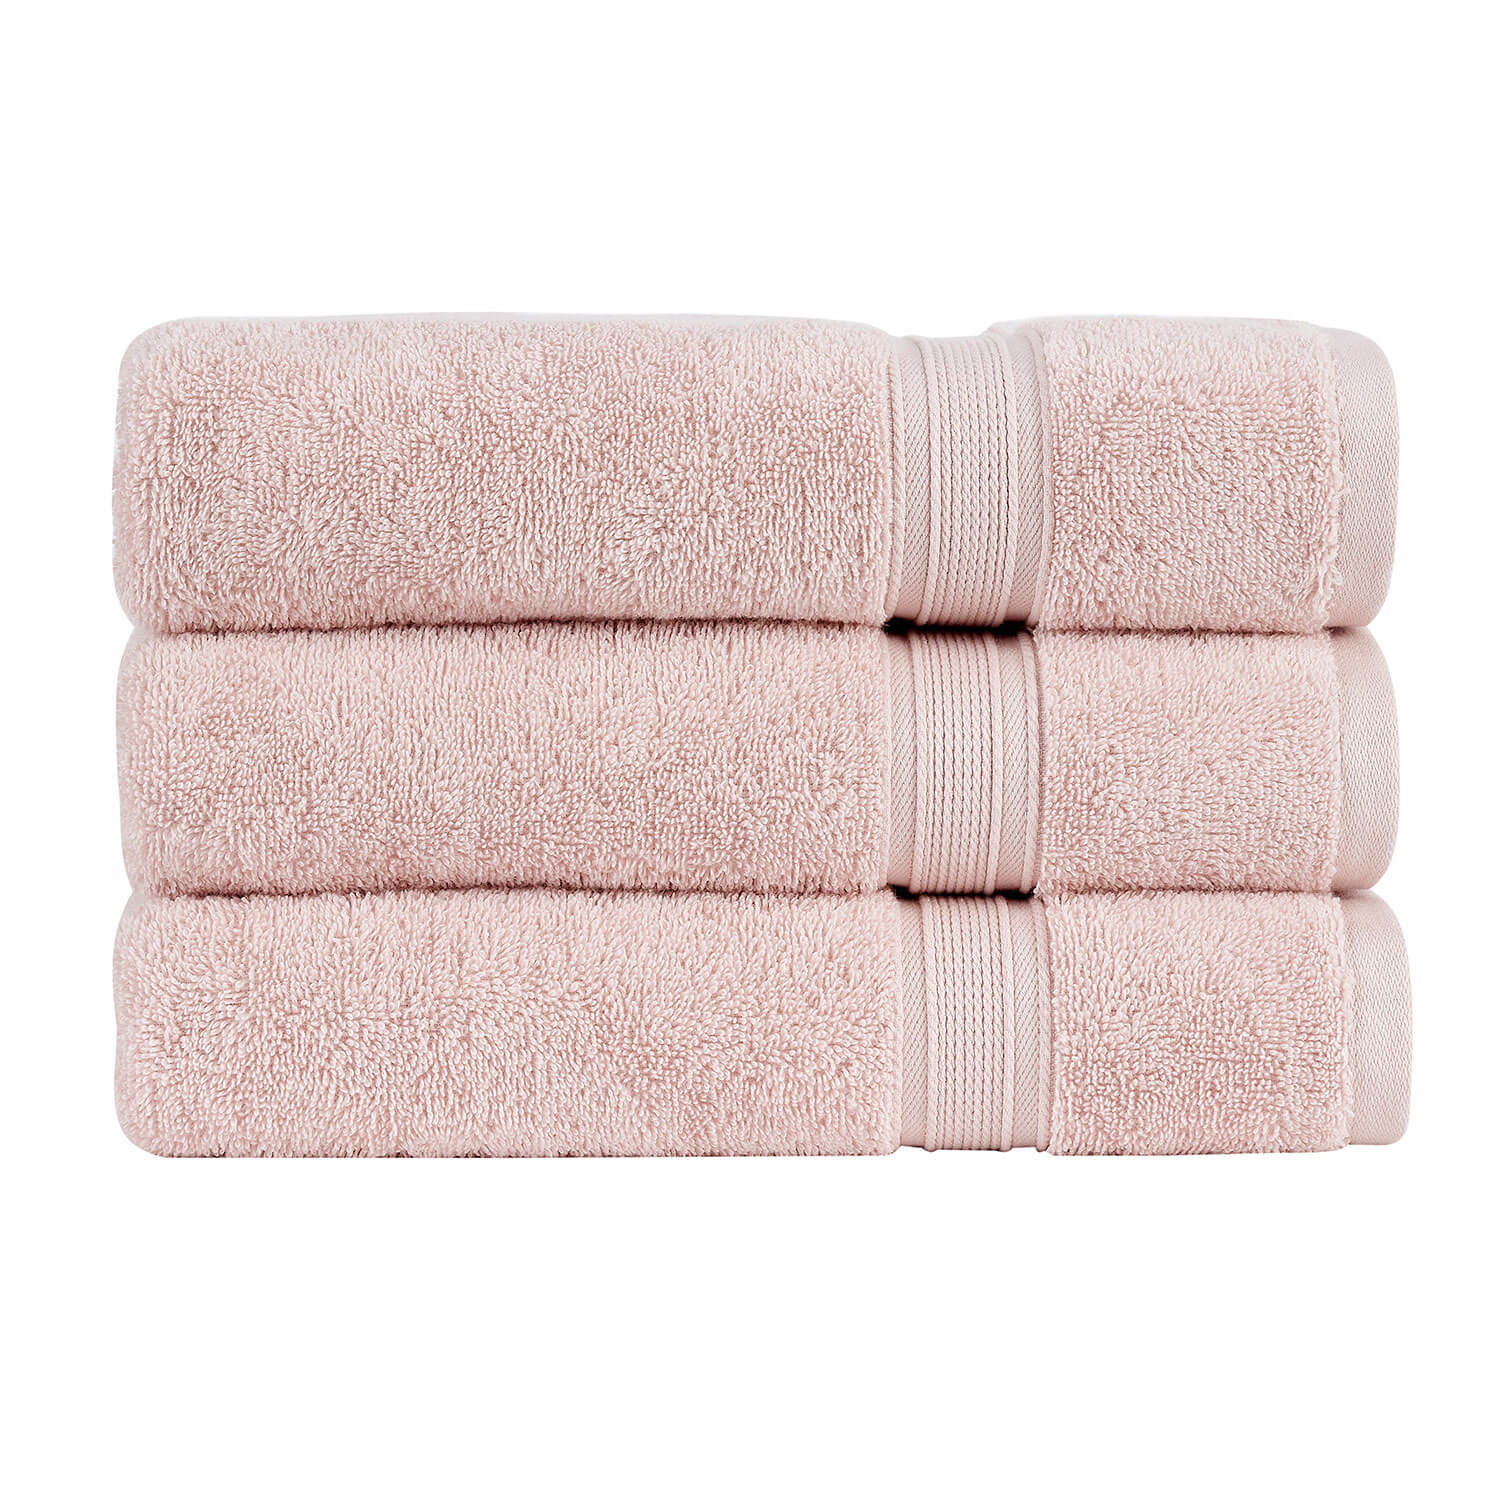 Christy Serene Bath Sheet - Dusty Pink 1 Shaws Department Stores